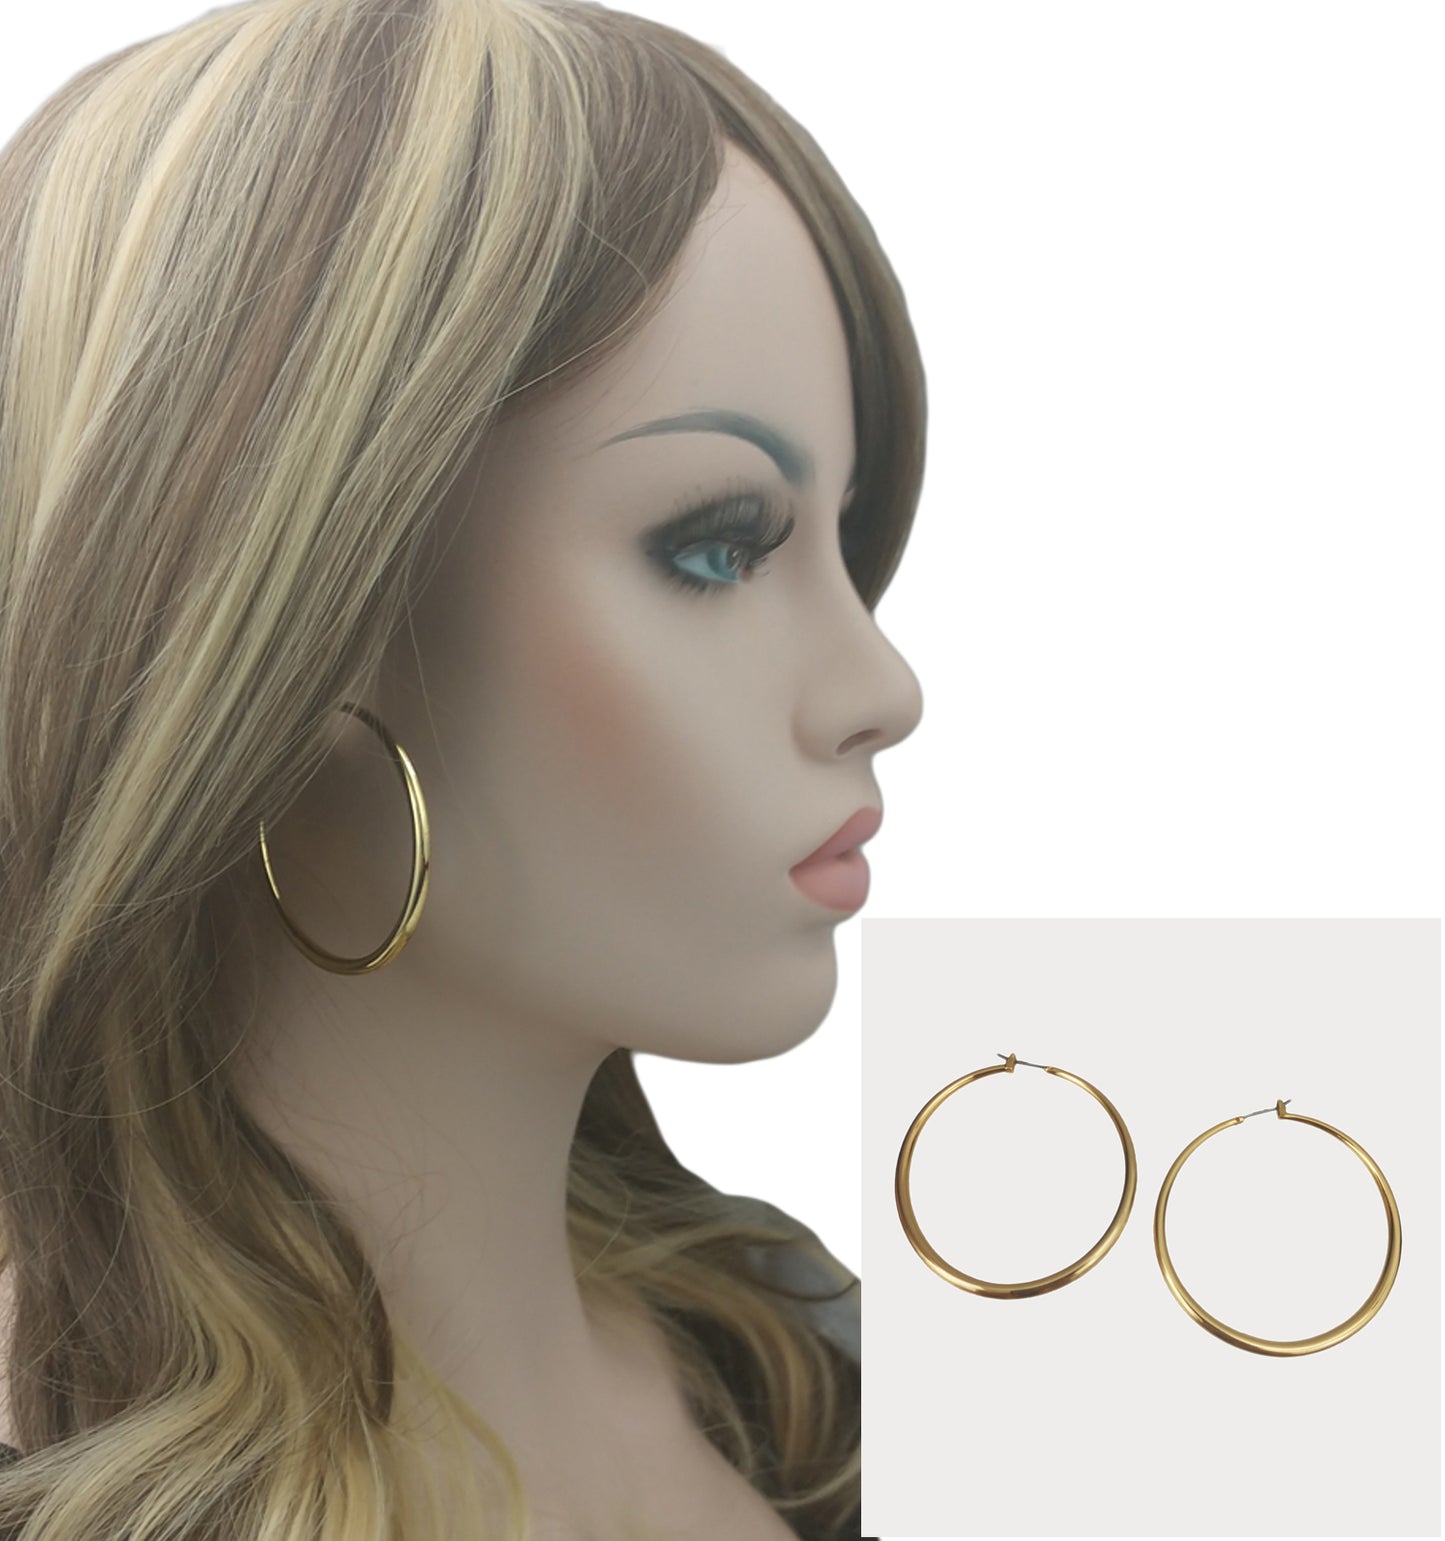 Gold Tone Graduated Tube Pierced Hoop Earrings2"